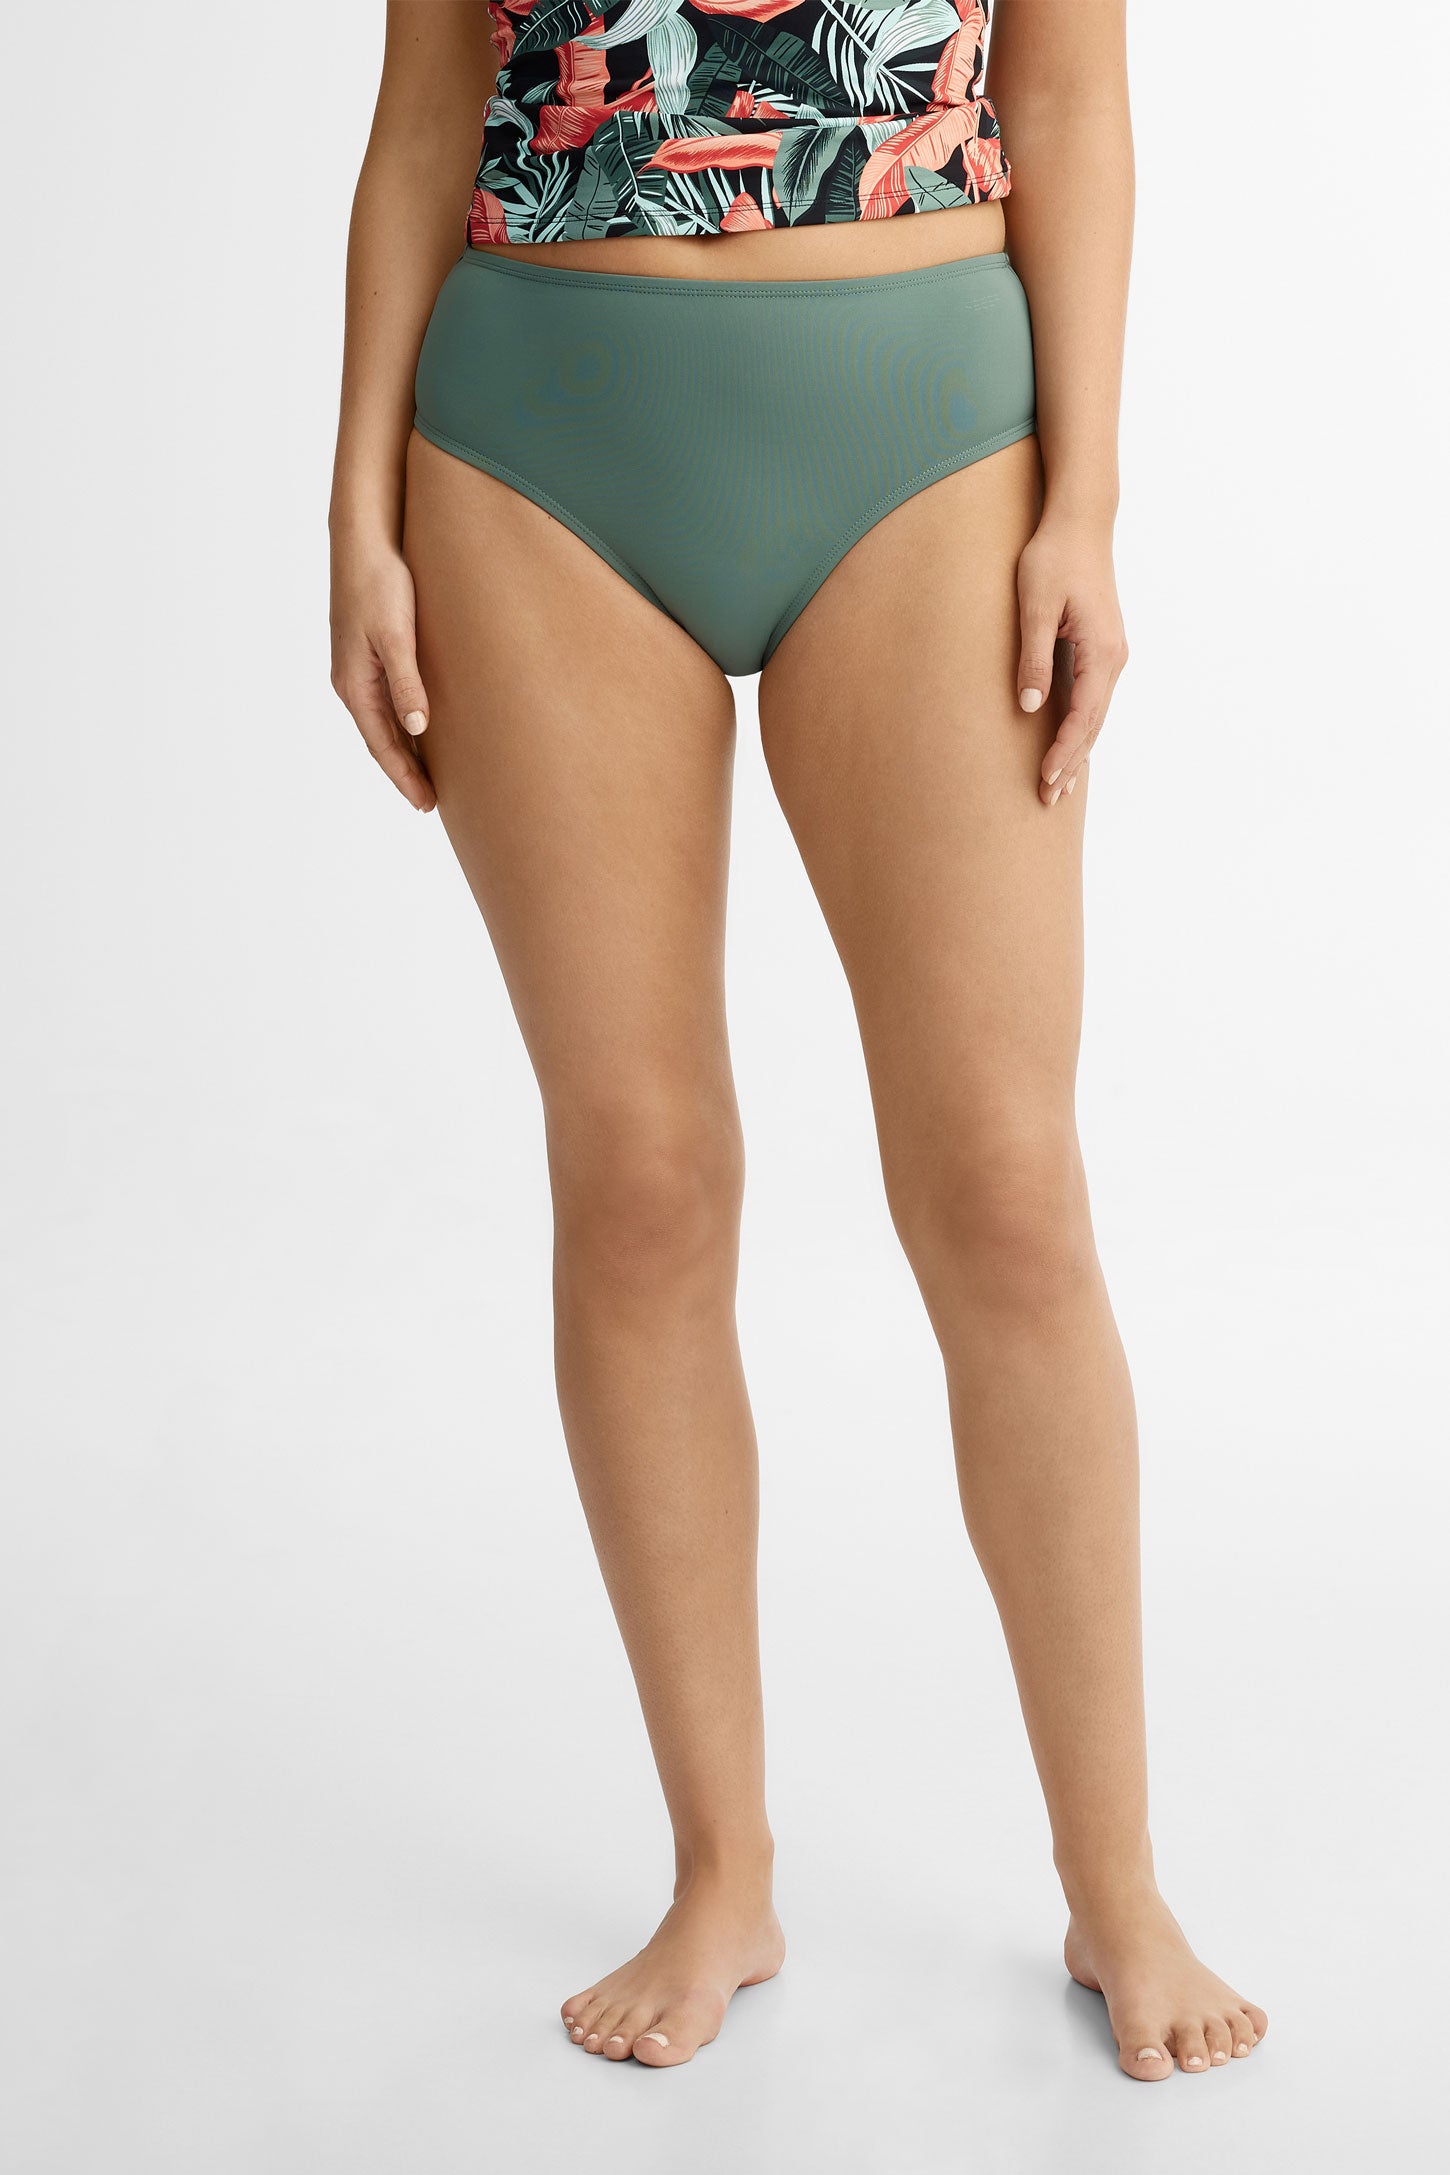 Culotte maillot de bain Bikini taille haute, 2/40$ - Femme && VERT FORET